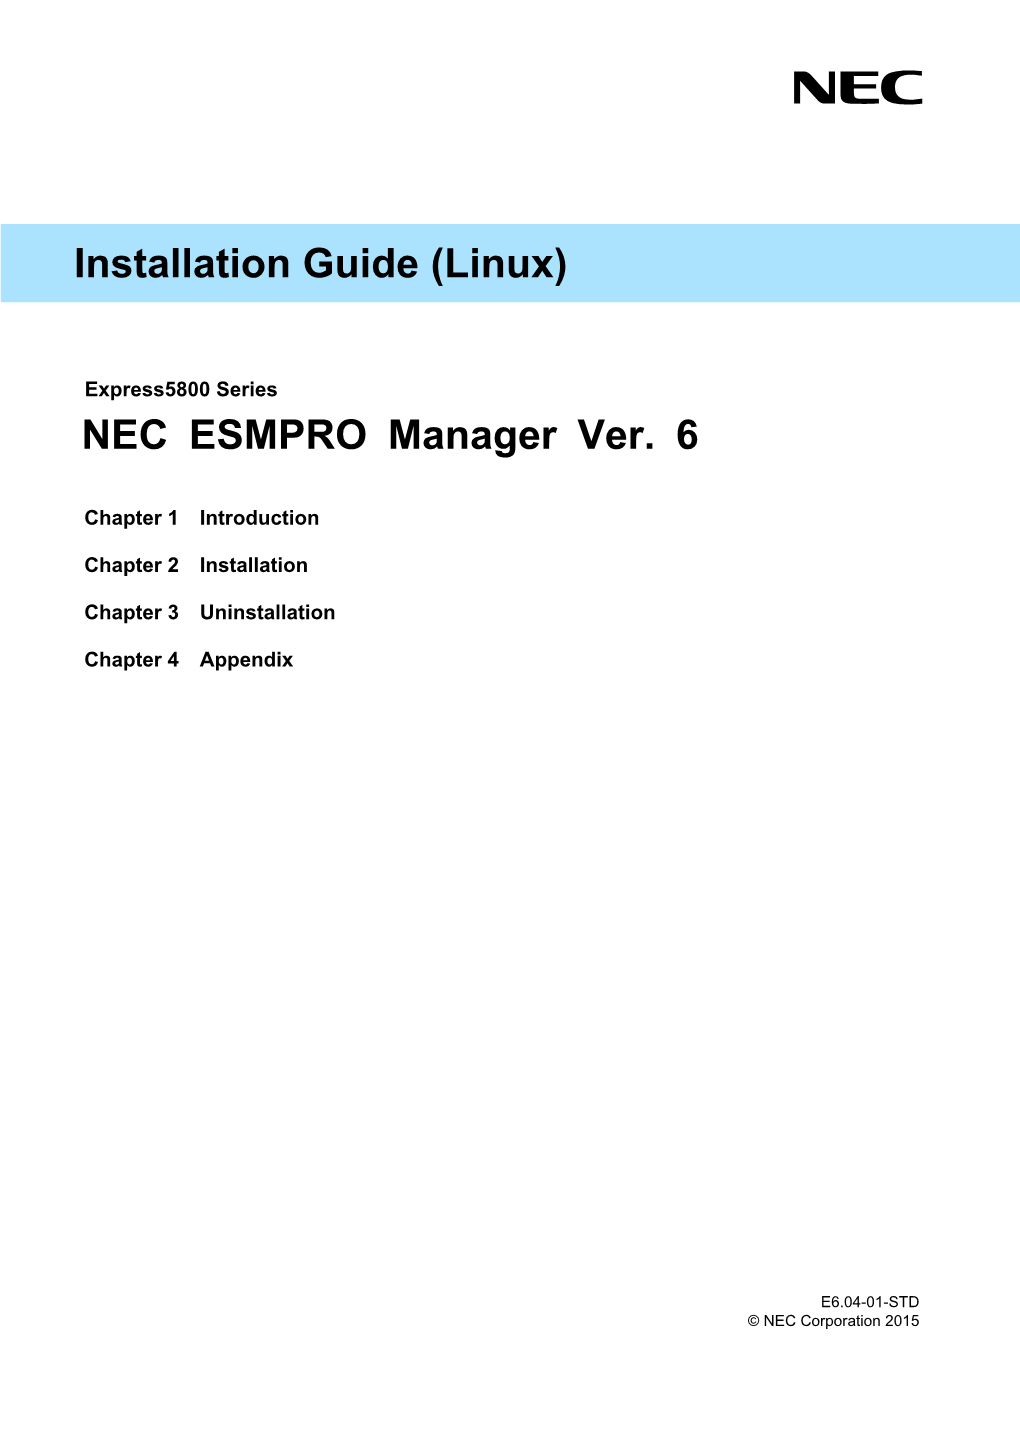 Installation Guide (Linux) NEC ESMPRO Manager Ver. 6